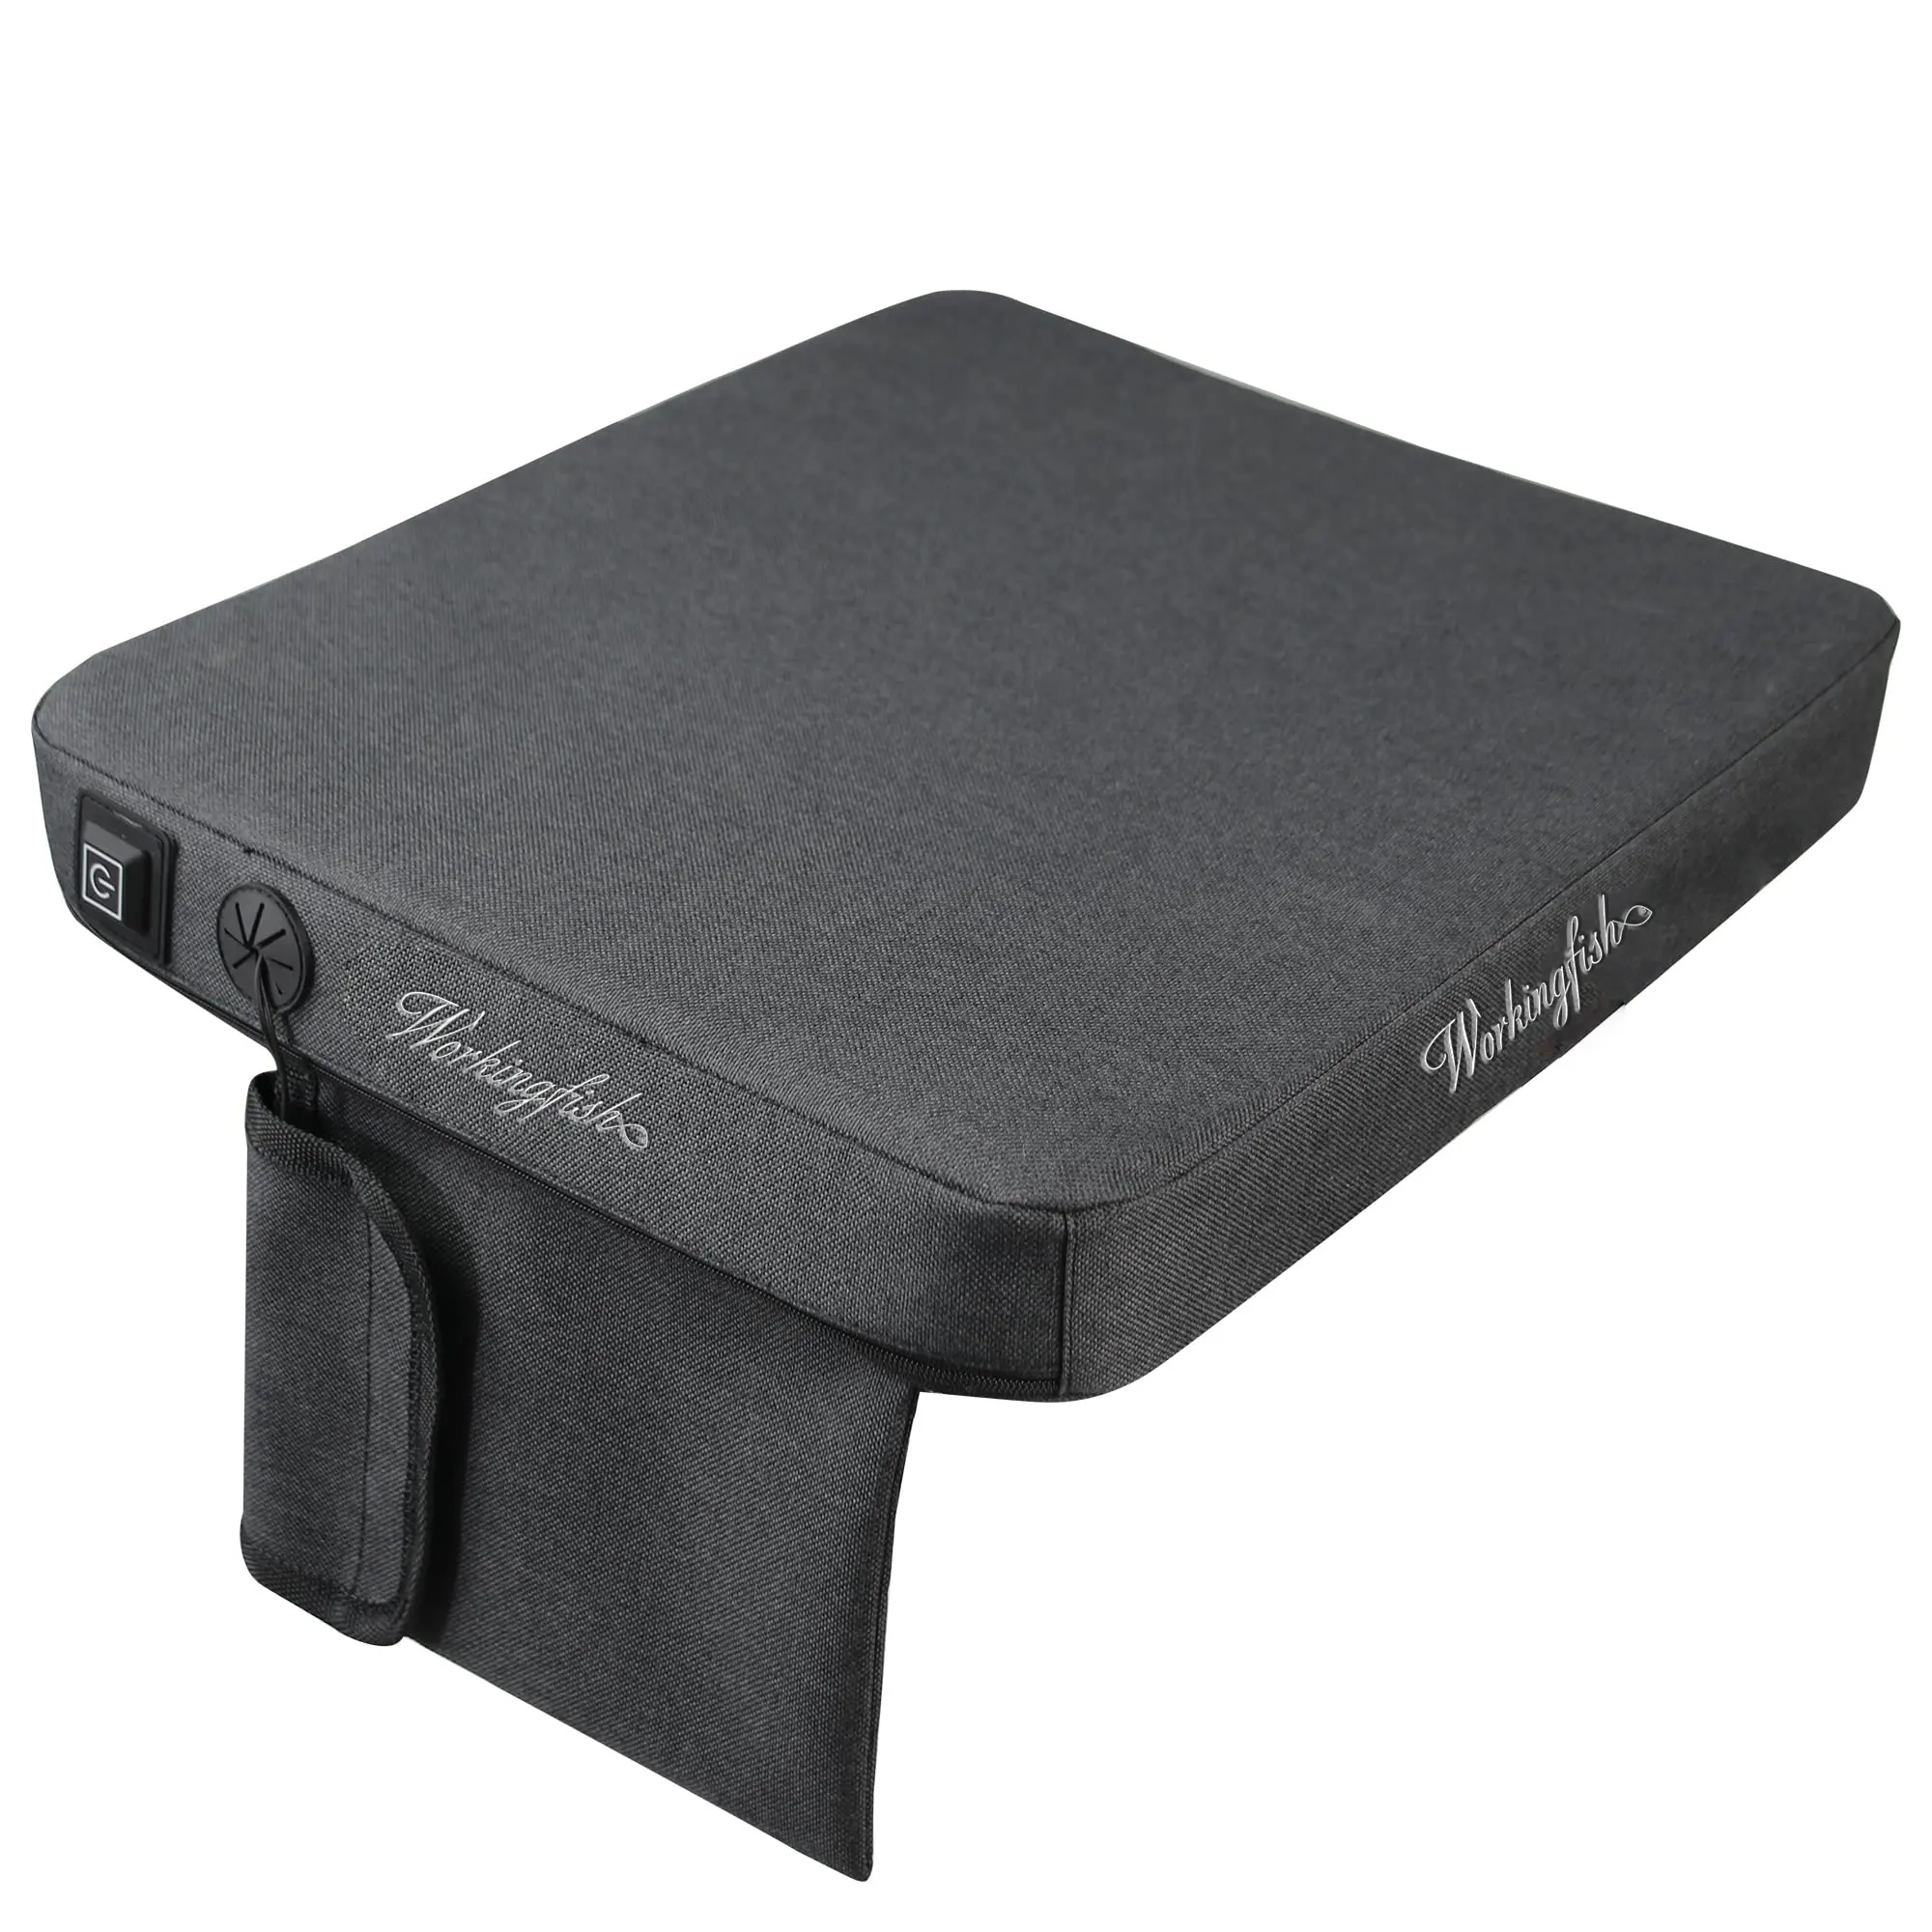 Workingfish Non-Slip Bottom Waterproof Fabricn Memory Foam Portable 149F USB Battery Heated Seat Cushion For Office Chair Car